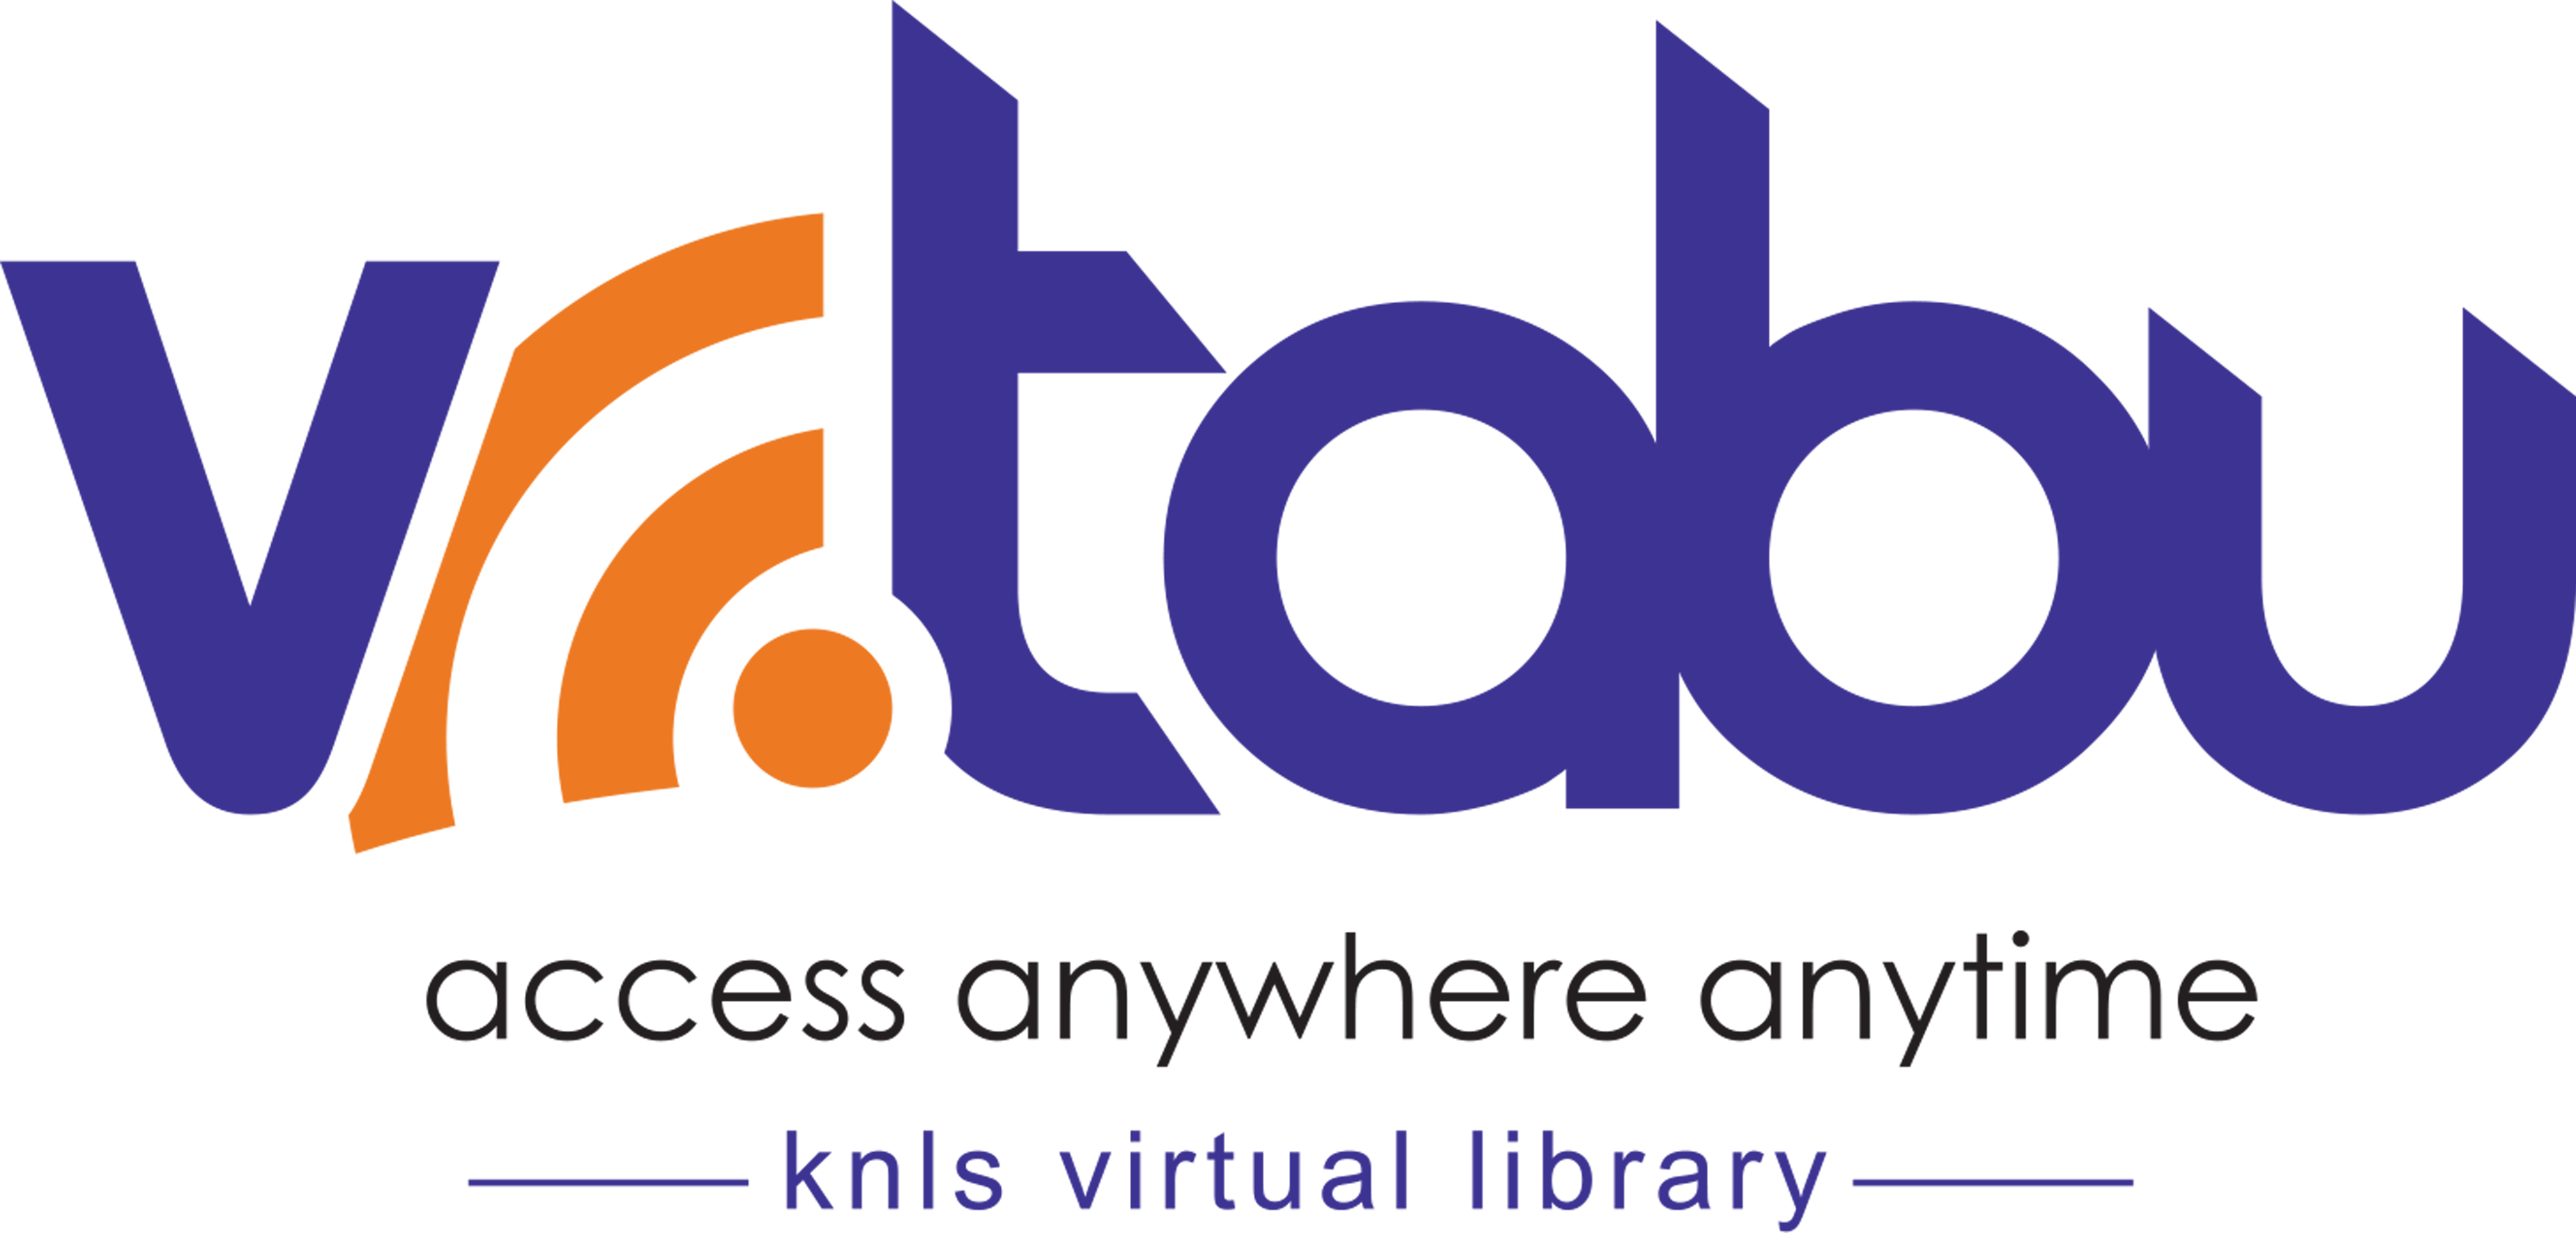 KNLS Virtual Library